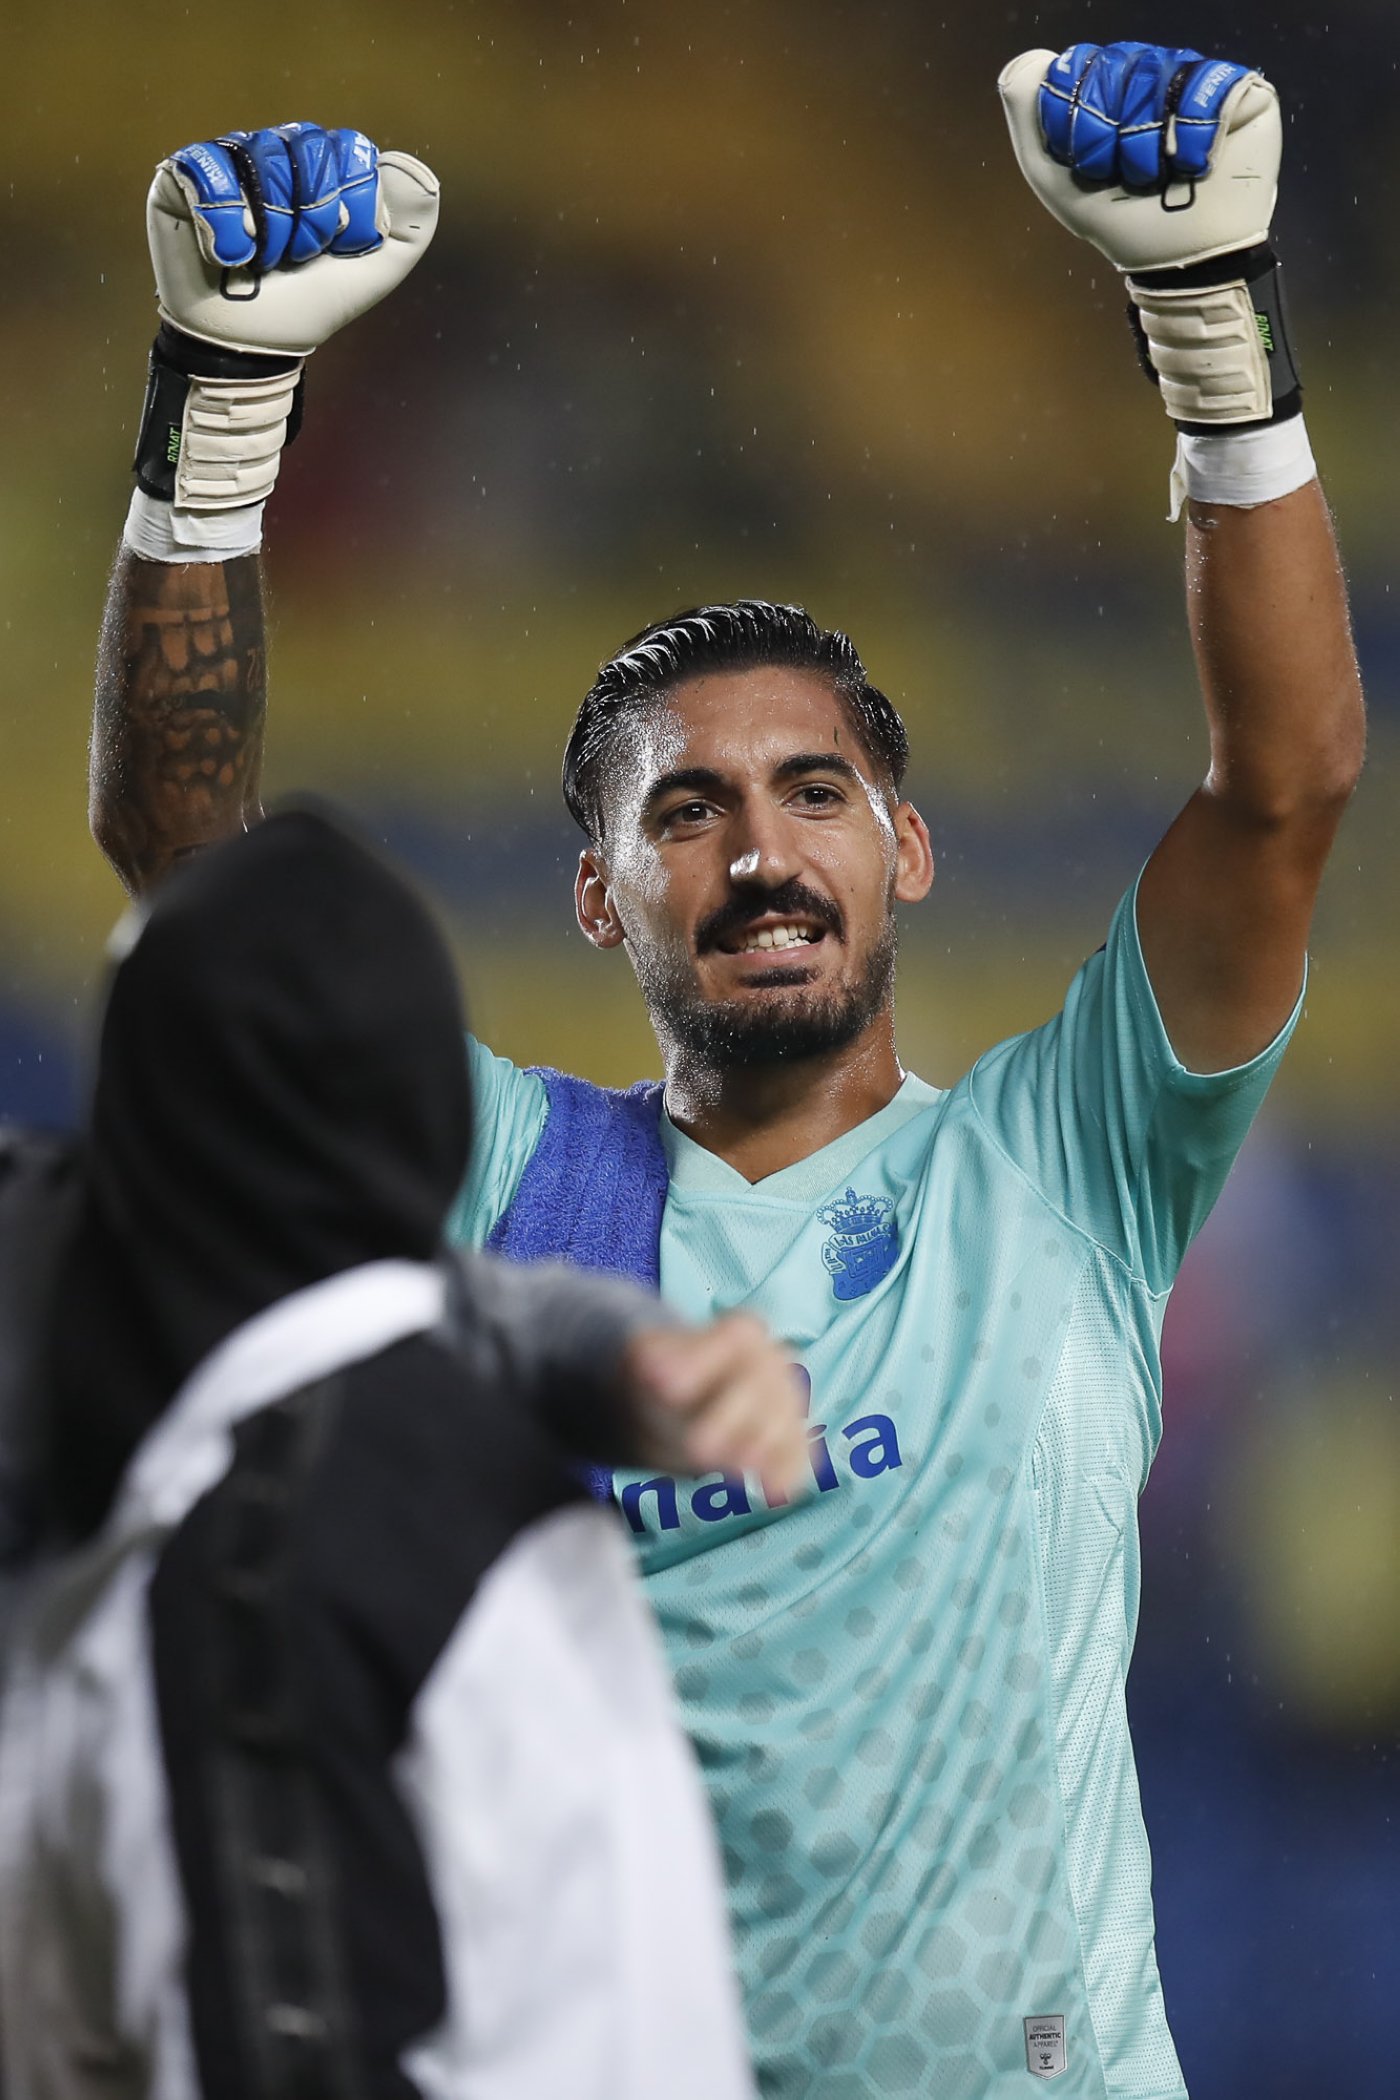 Álvaro Valles, brazos arriba celebrando la victoria del pasado fin de semana. / UDLP